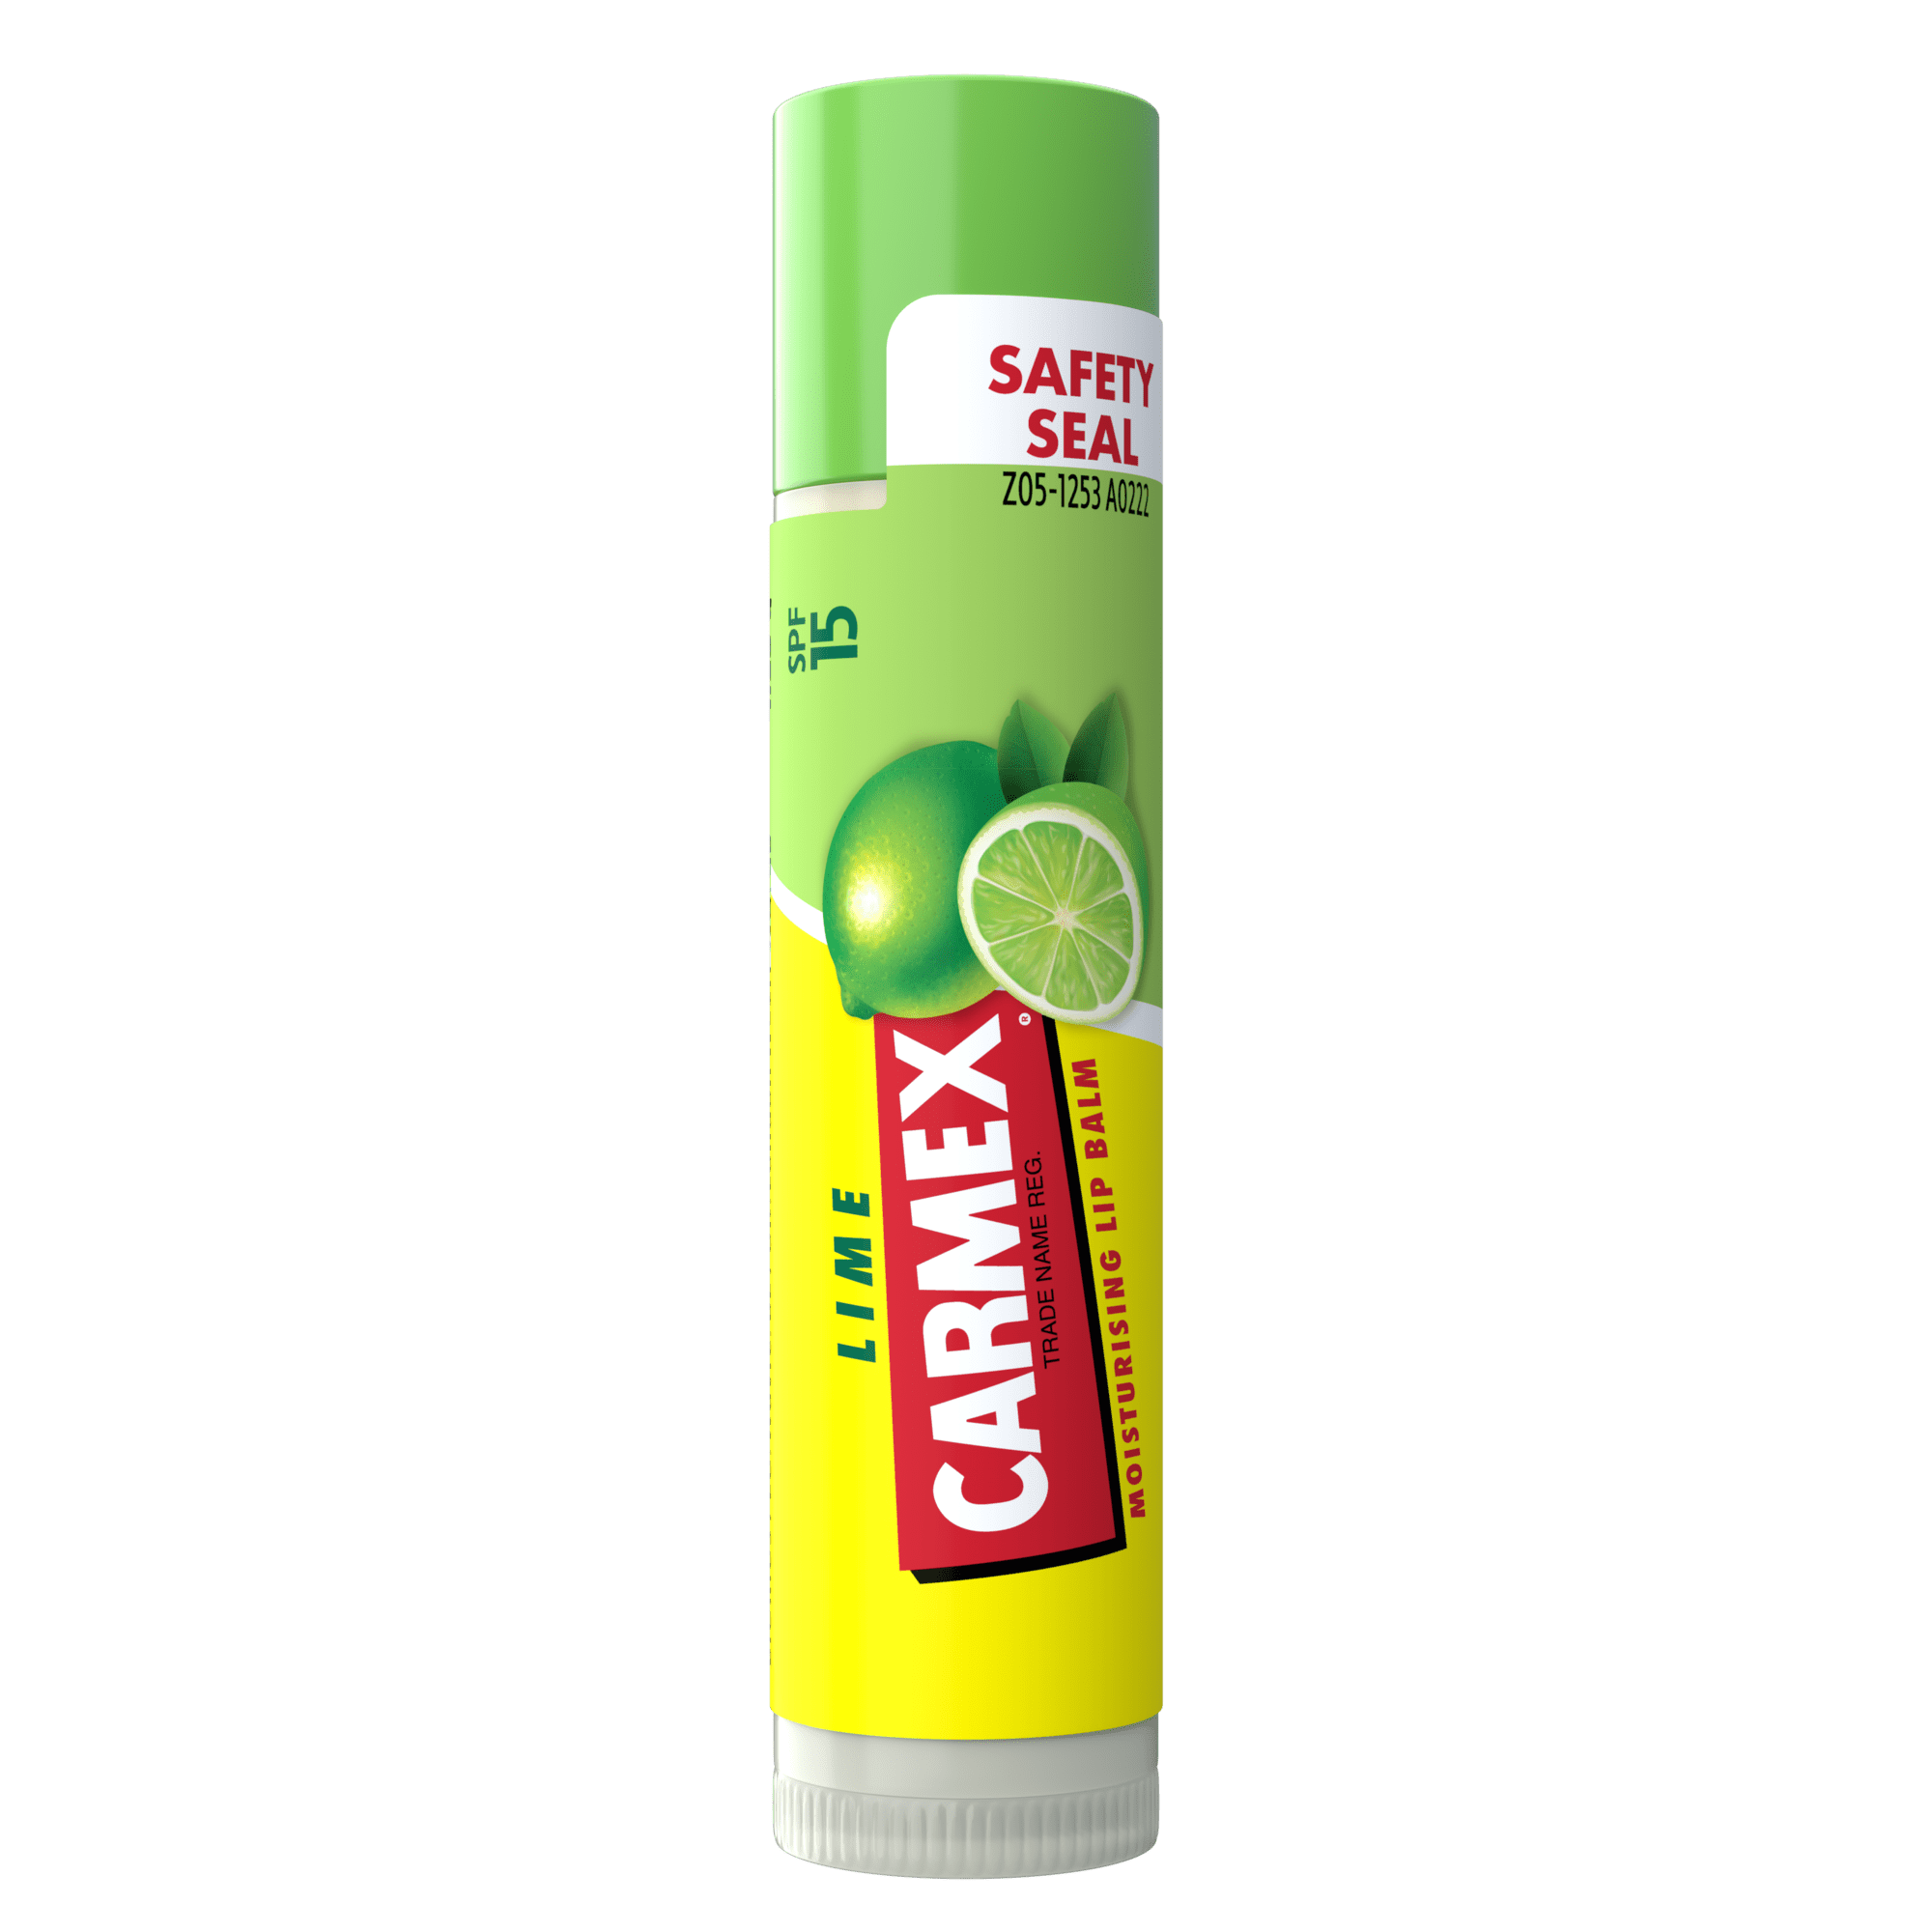 CARMEX Stick Lime SPF15